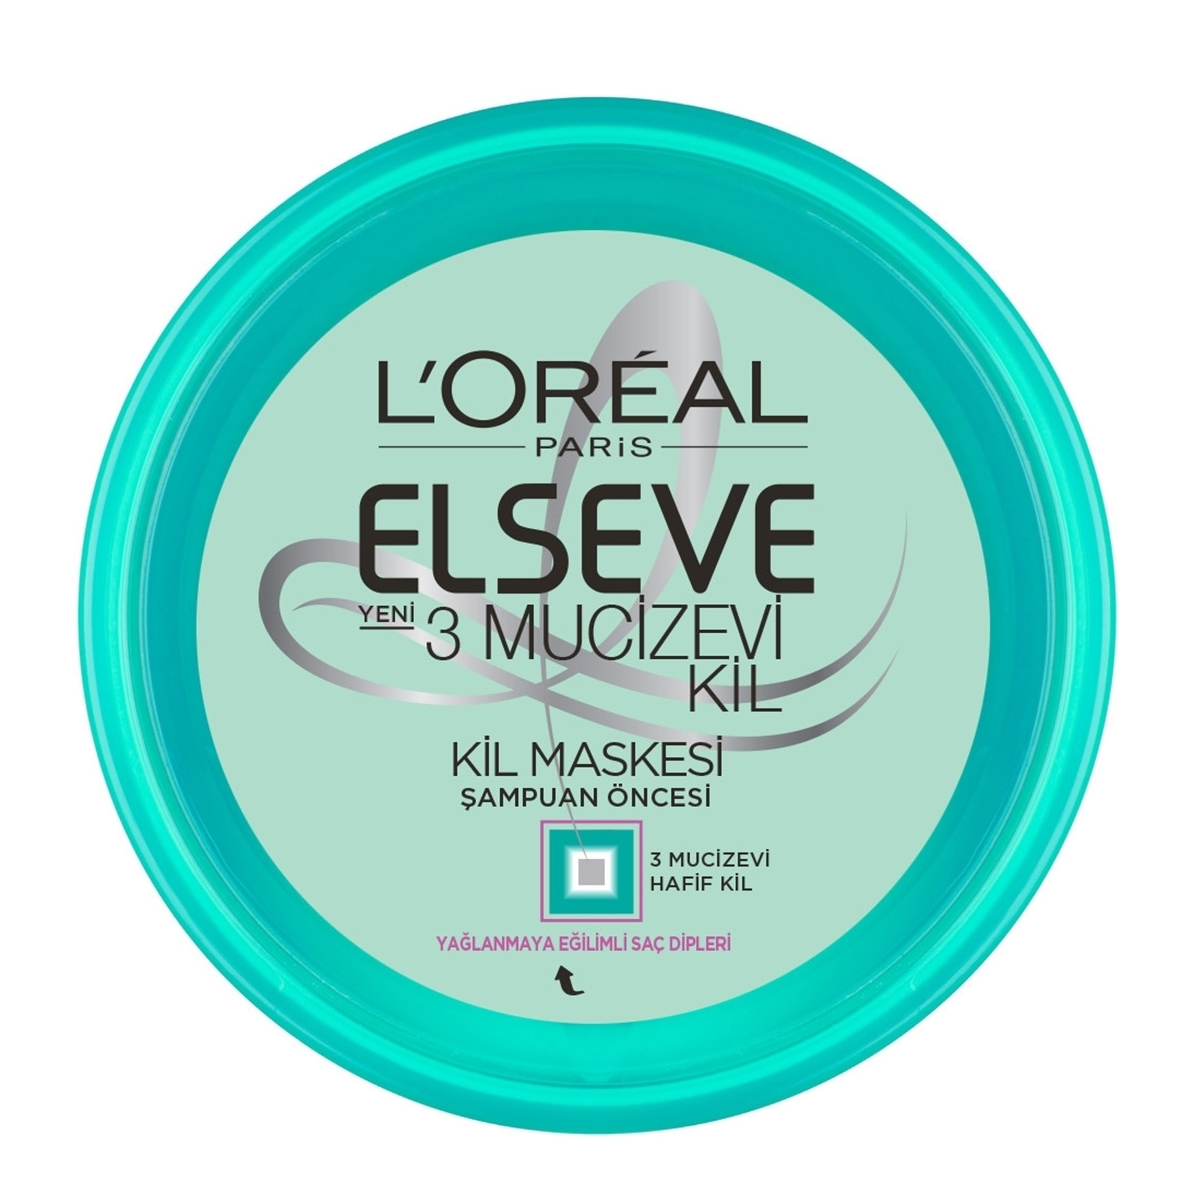 L'Oréal Elseve 3 Mucizevi Kil Maskesi 150 ml